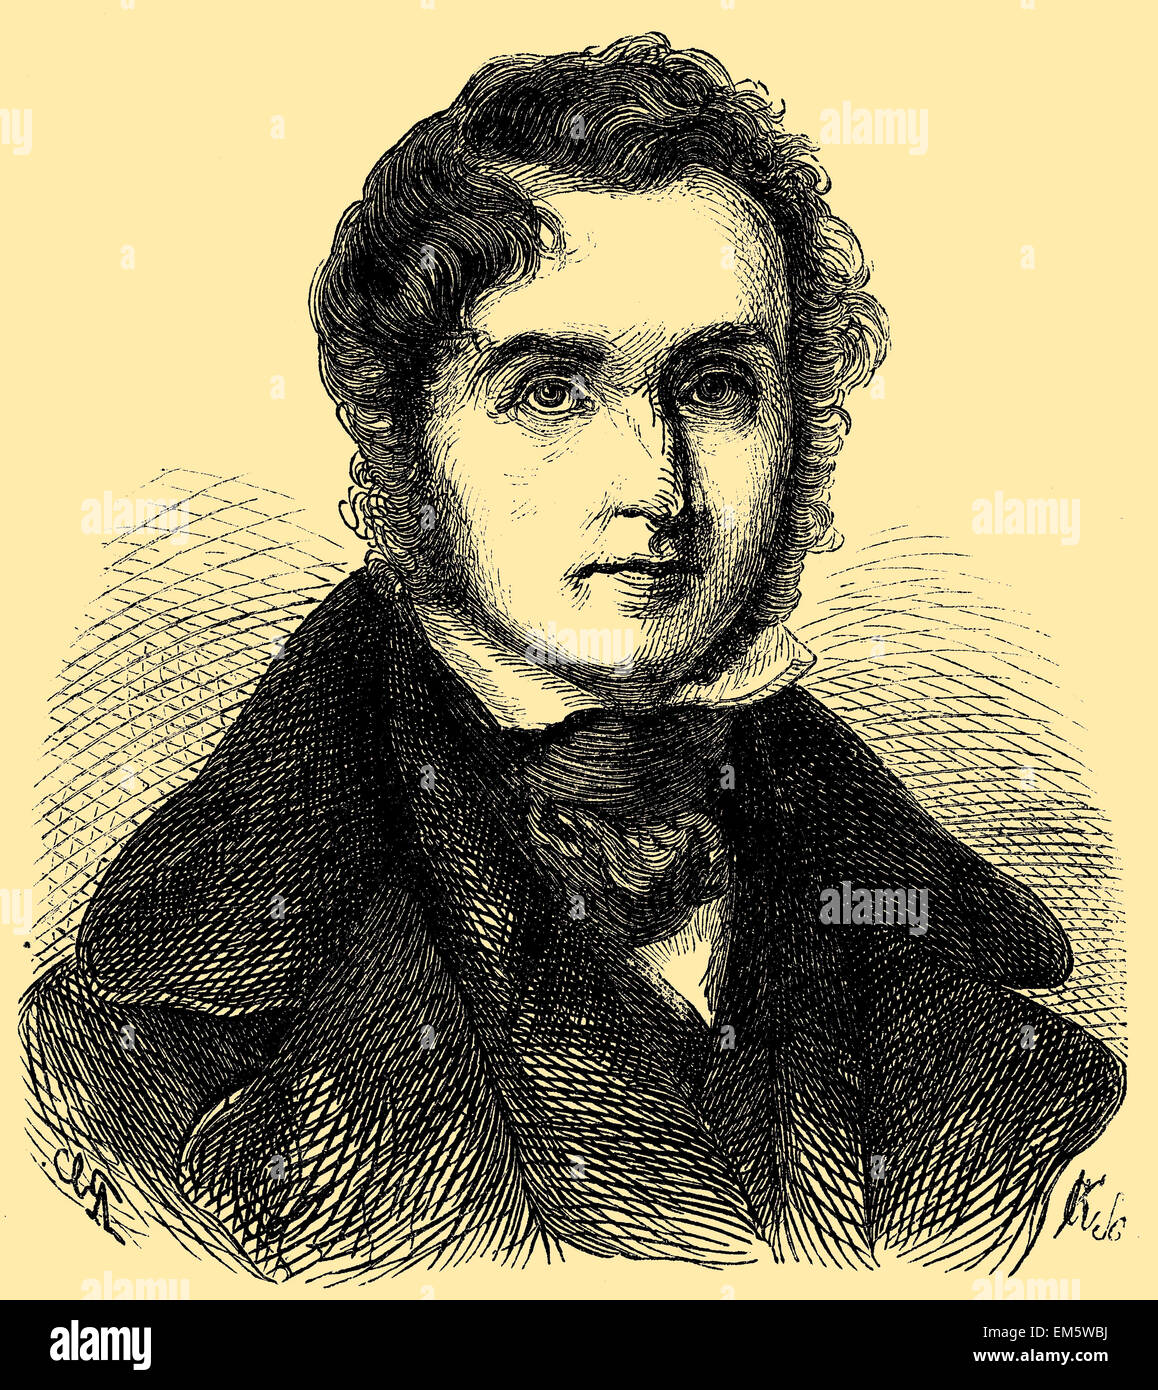 Justus von Liebig (12 mai 1803 - 18 avril 1873), chimiste allemand Banque D'Images